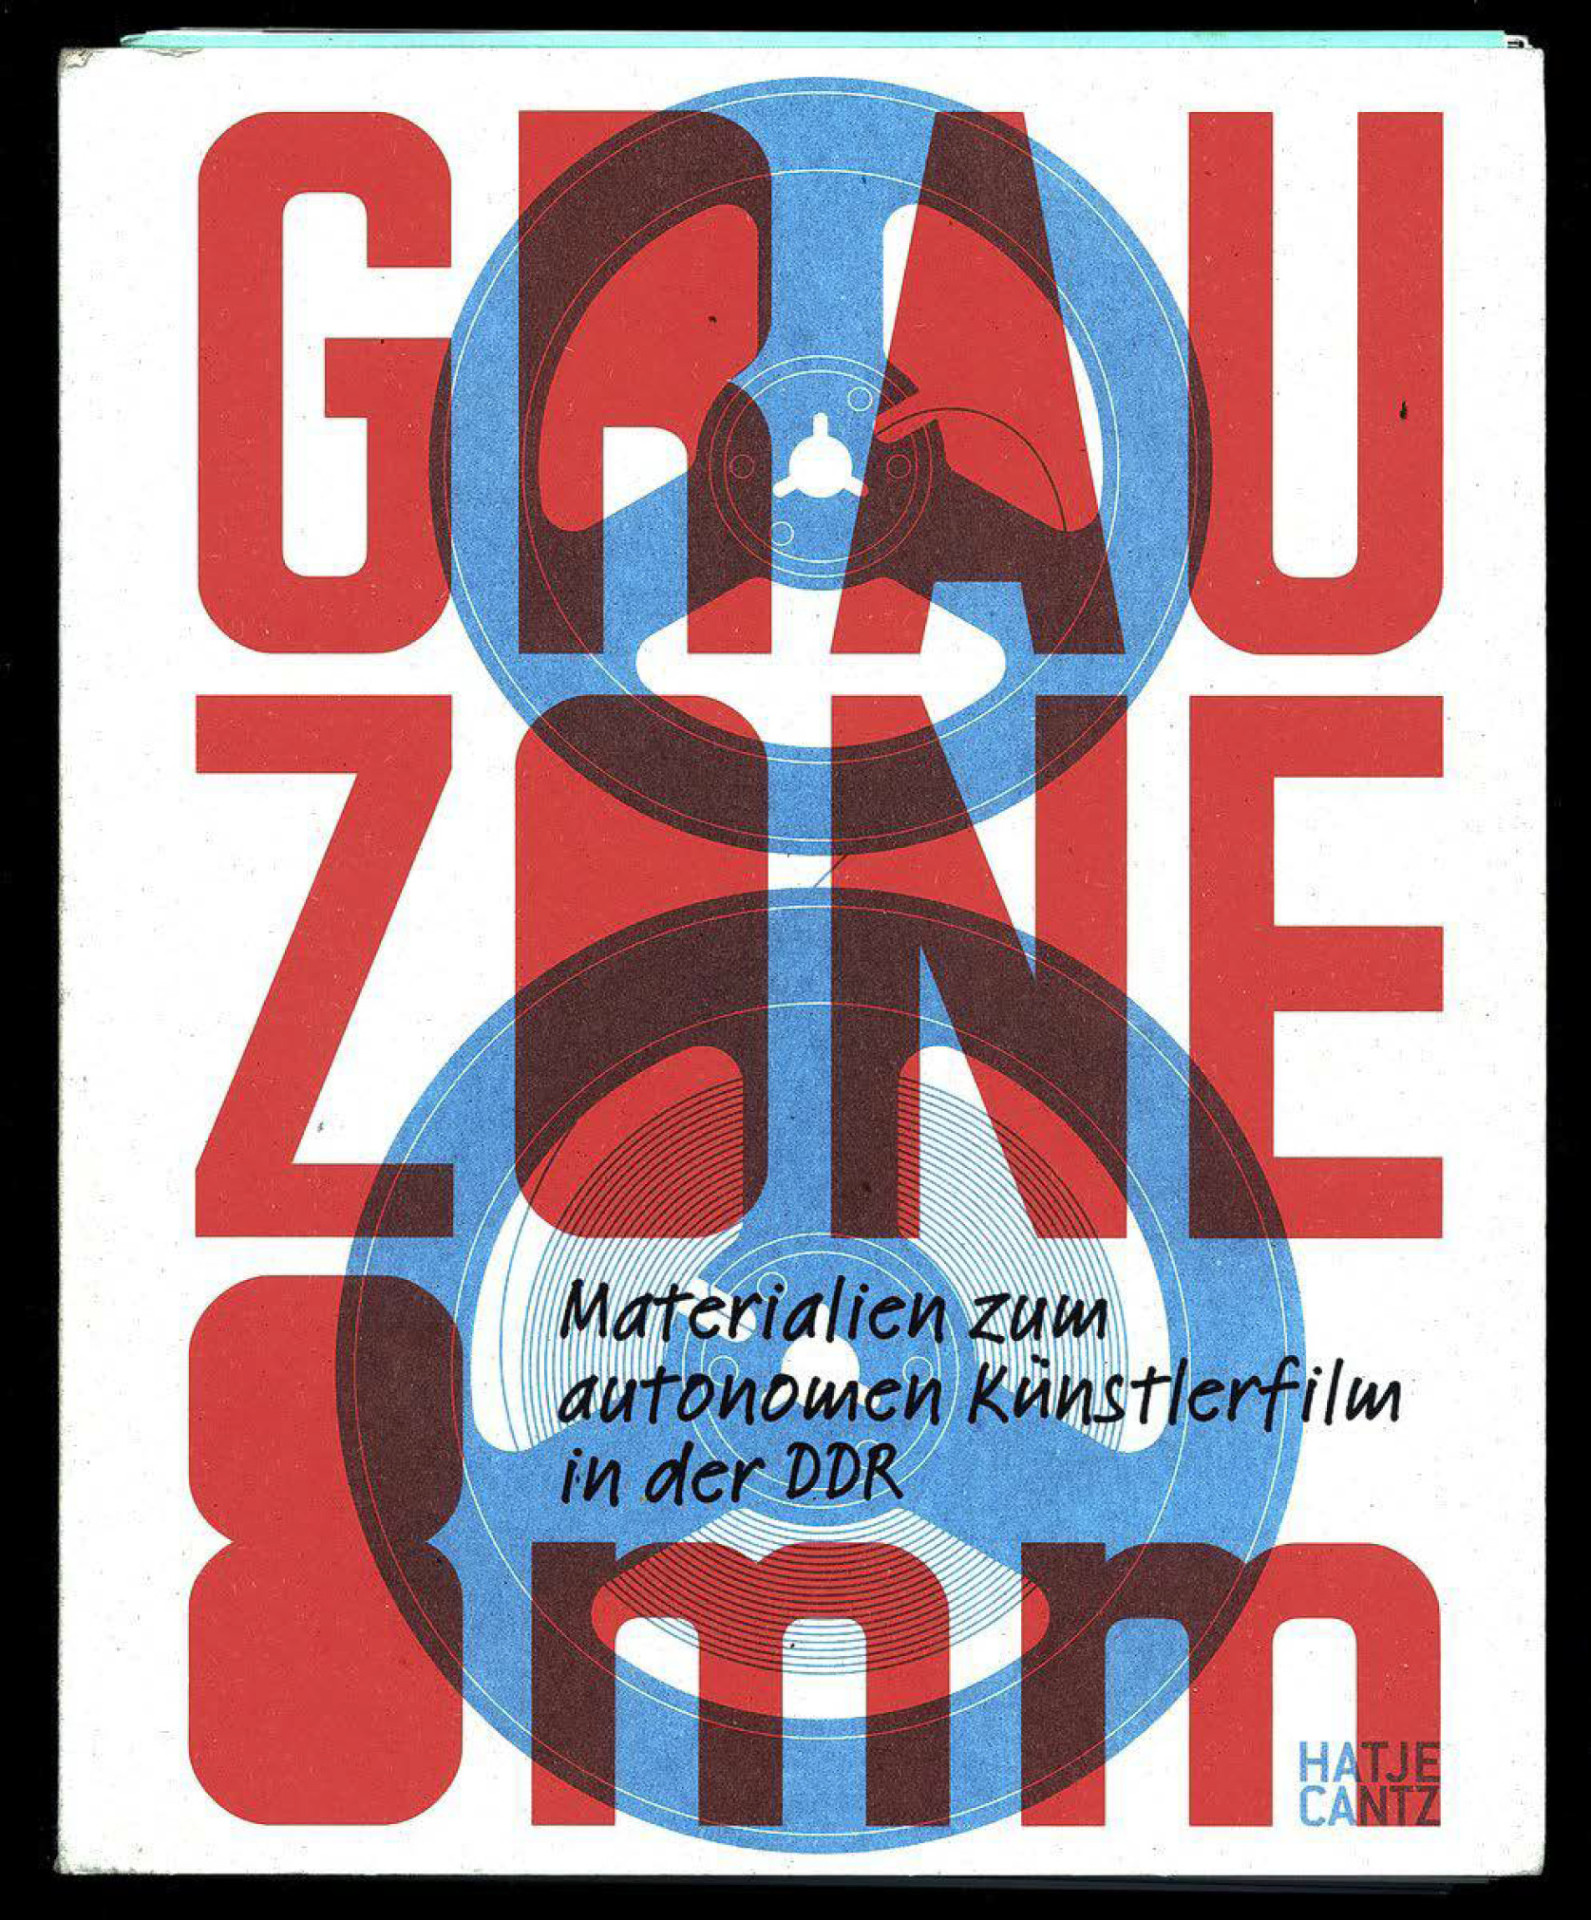 Buchcover "Grauzone 8 mm" (Copyright: Dieter Daniels)